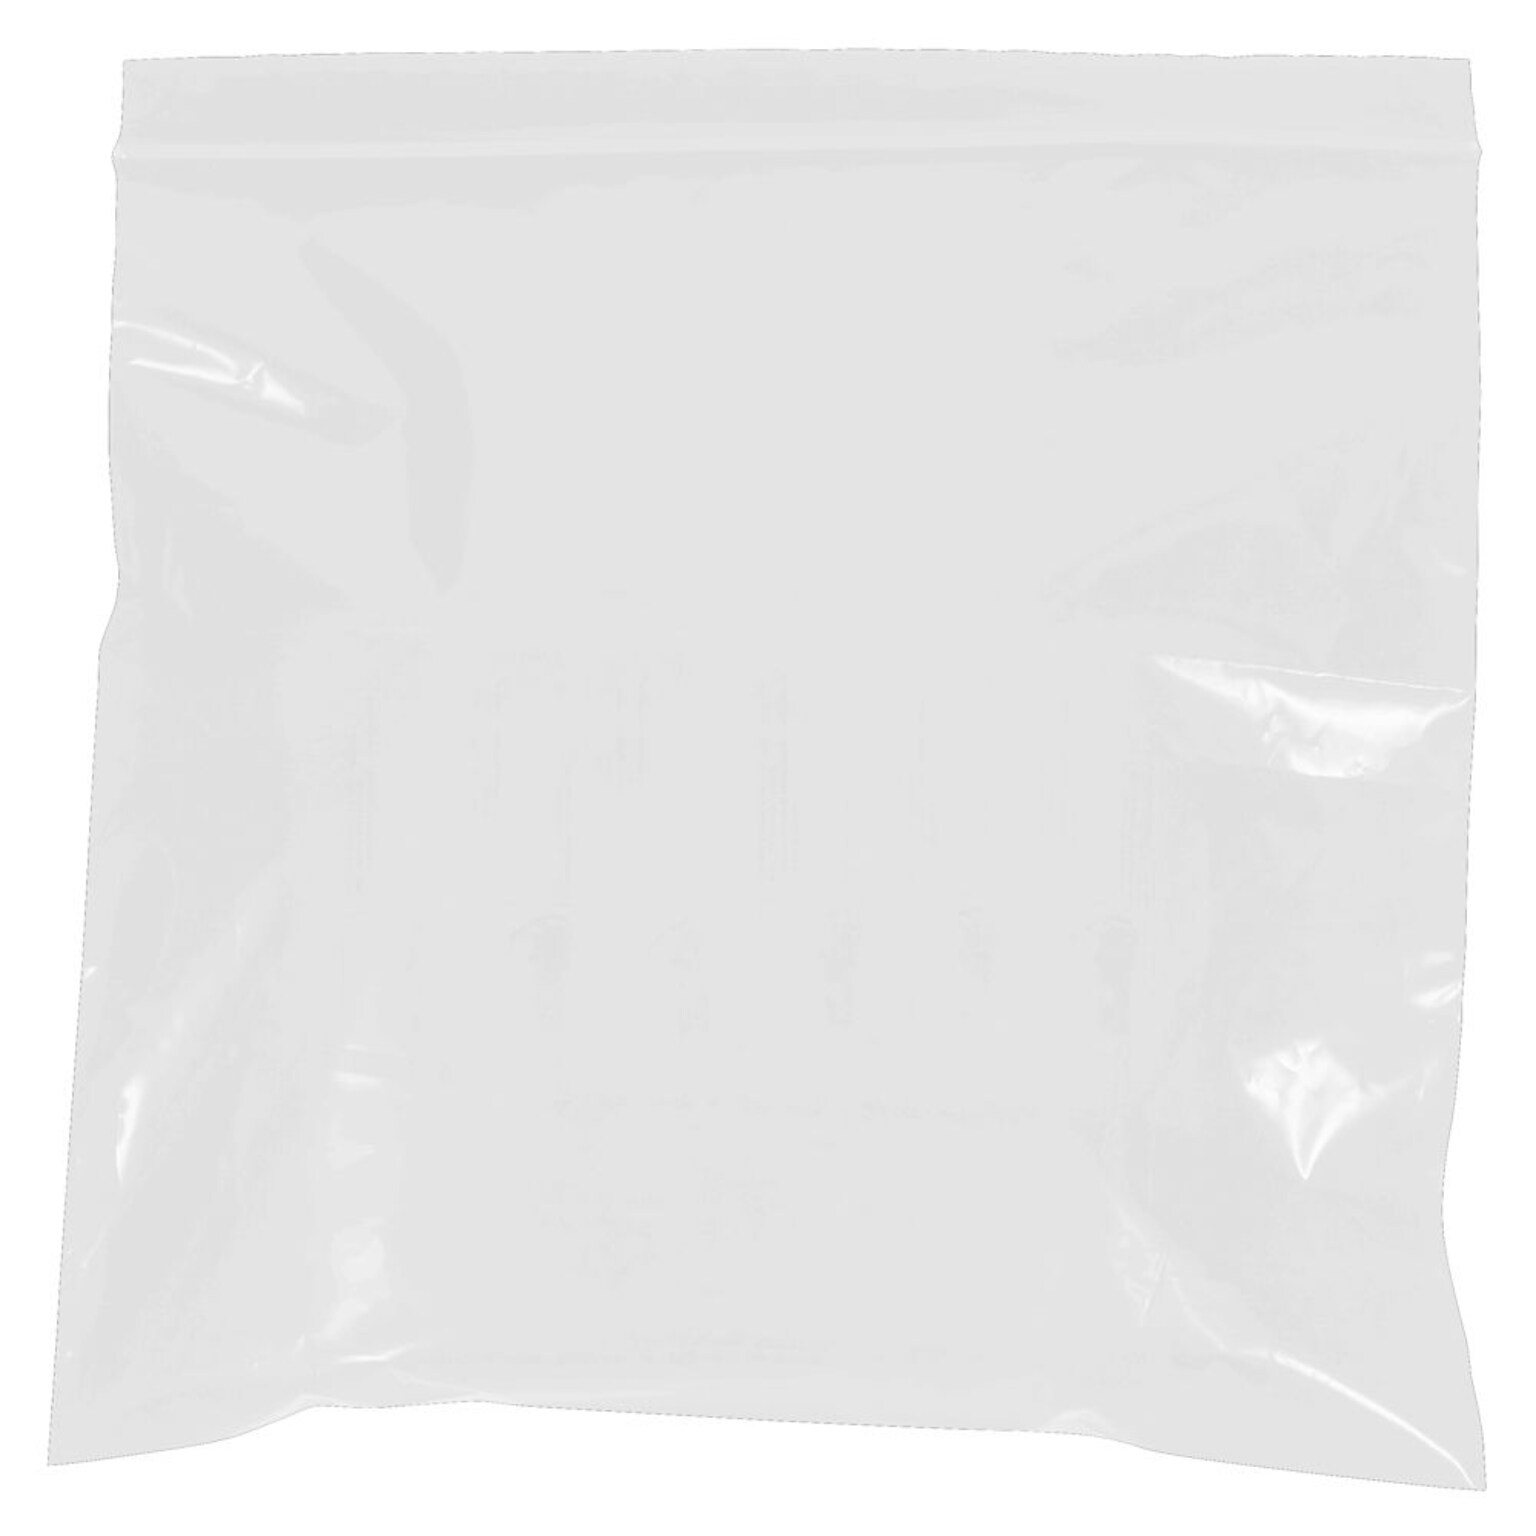 8W x 10L Reclosable Poly Bag, 2.0 Mil, 1000/Carton (PB3635)